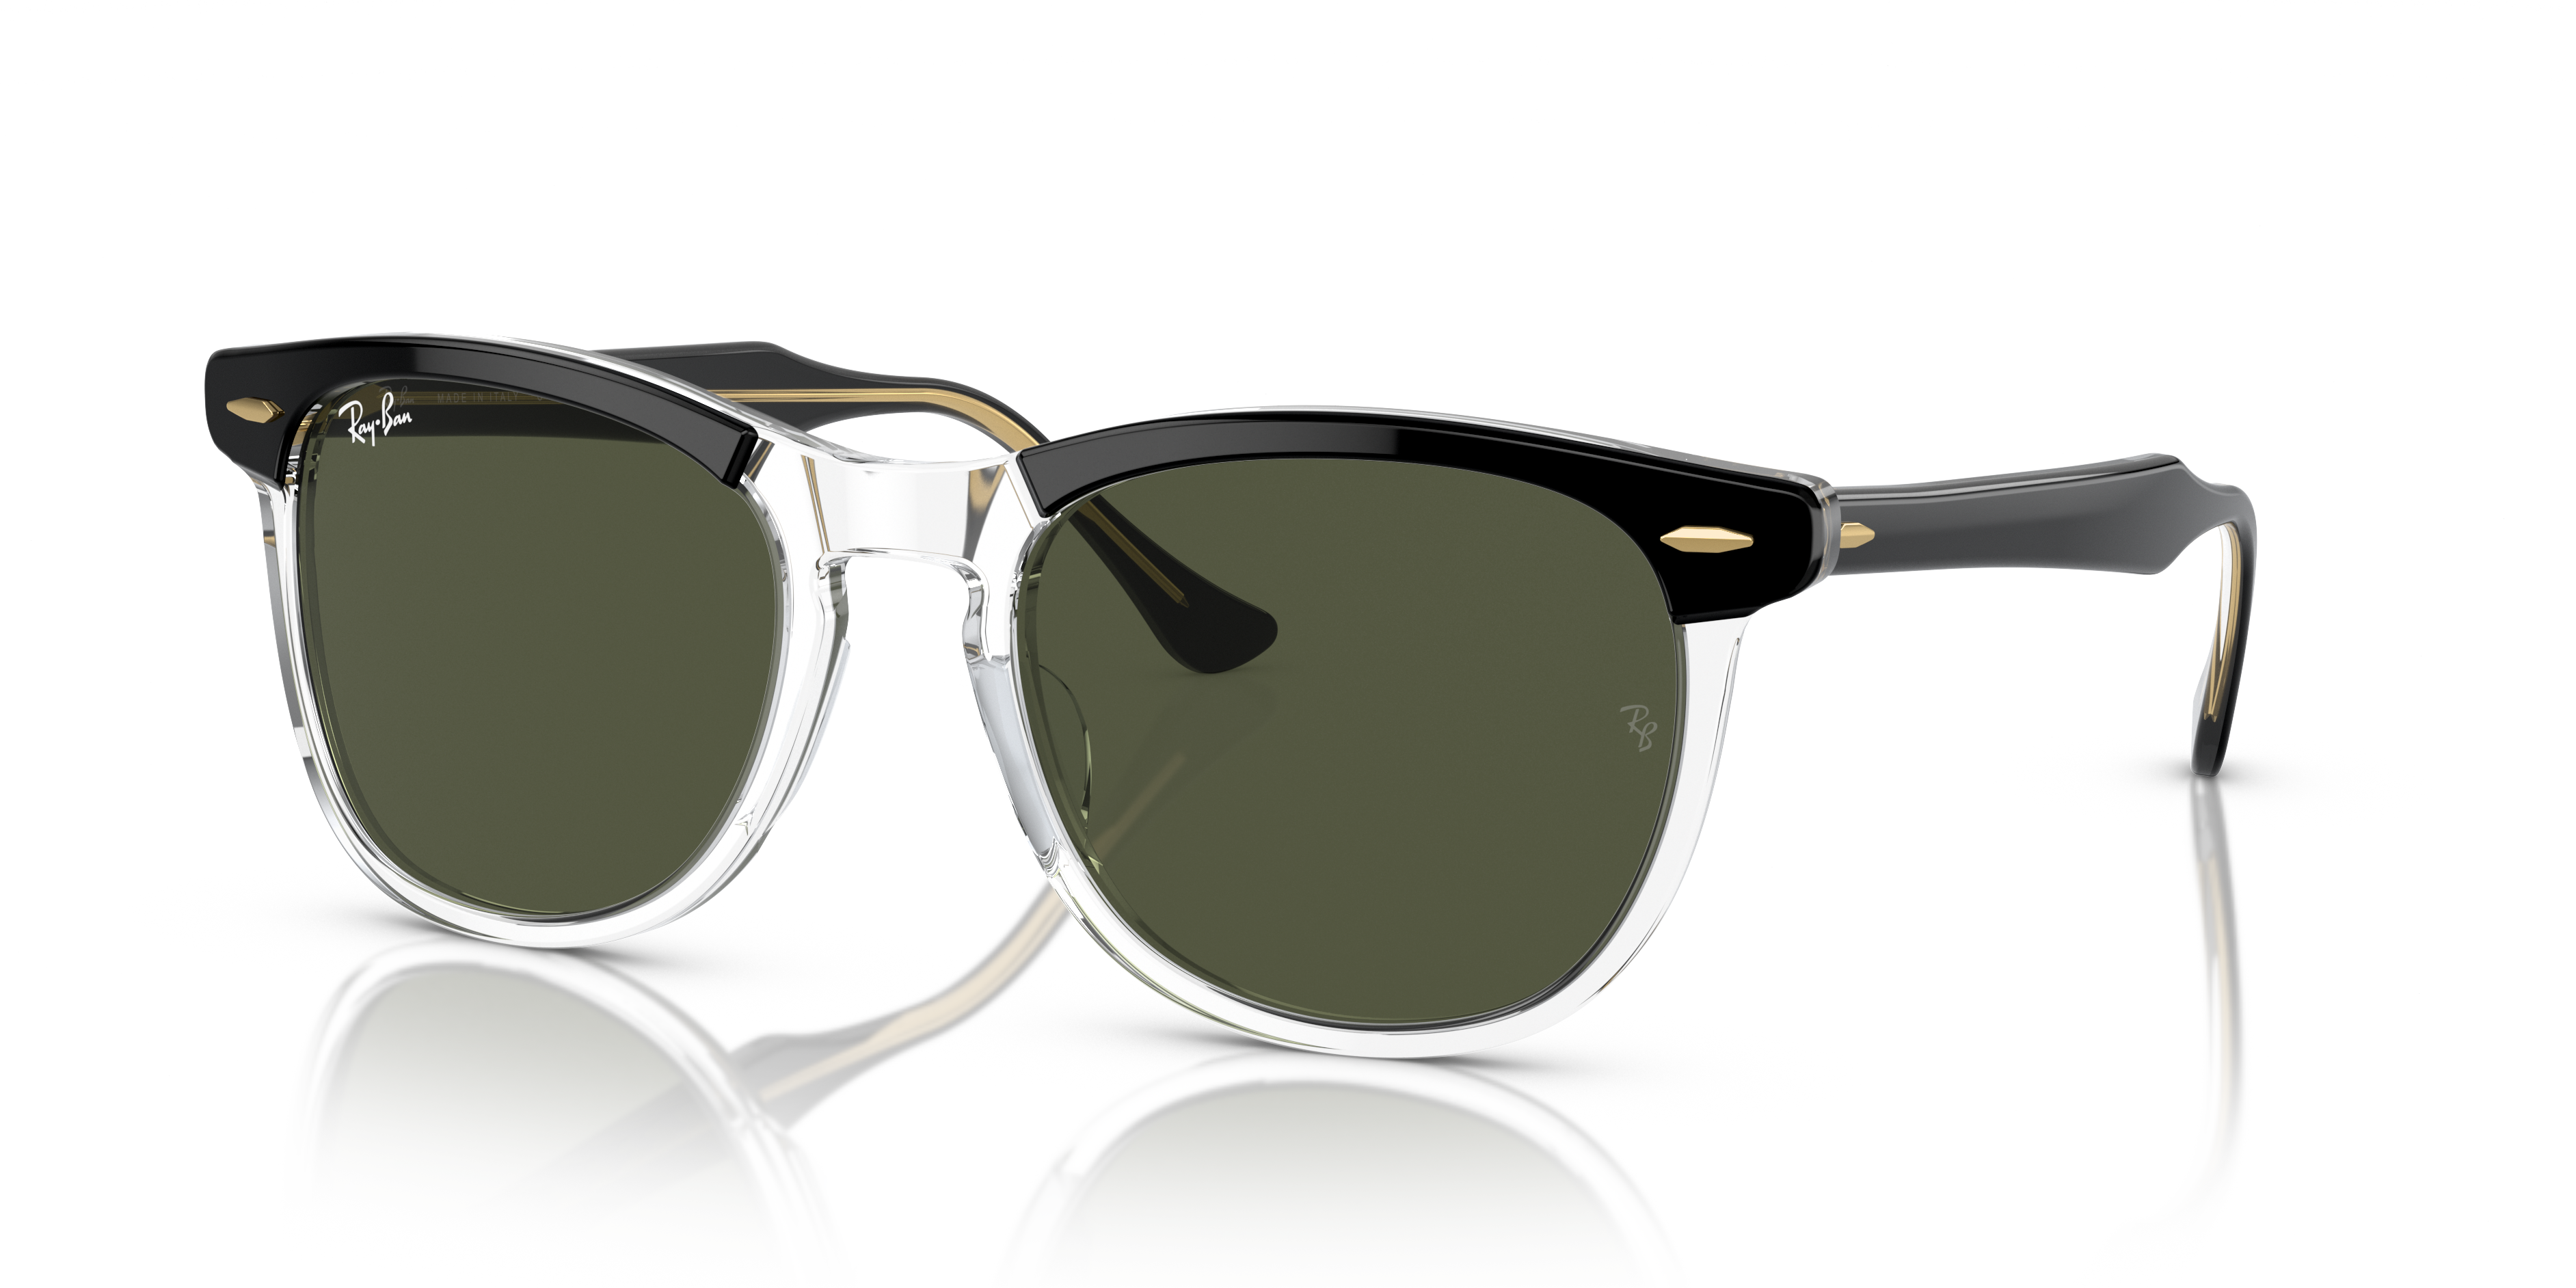 Buy Black Eagle Stylish New UniBody Lens Design Mirror UV Protected Goggles  Sunglasses For Men, Women, Boys, Girls (Green) at Amazon.in